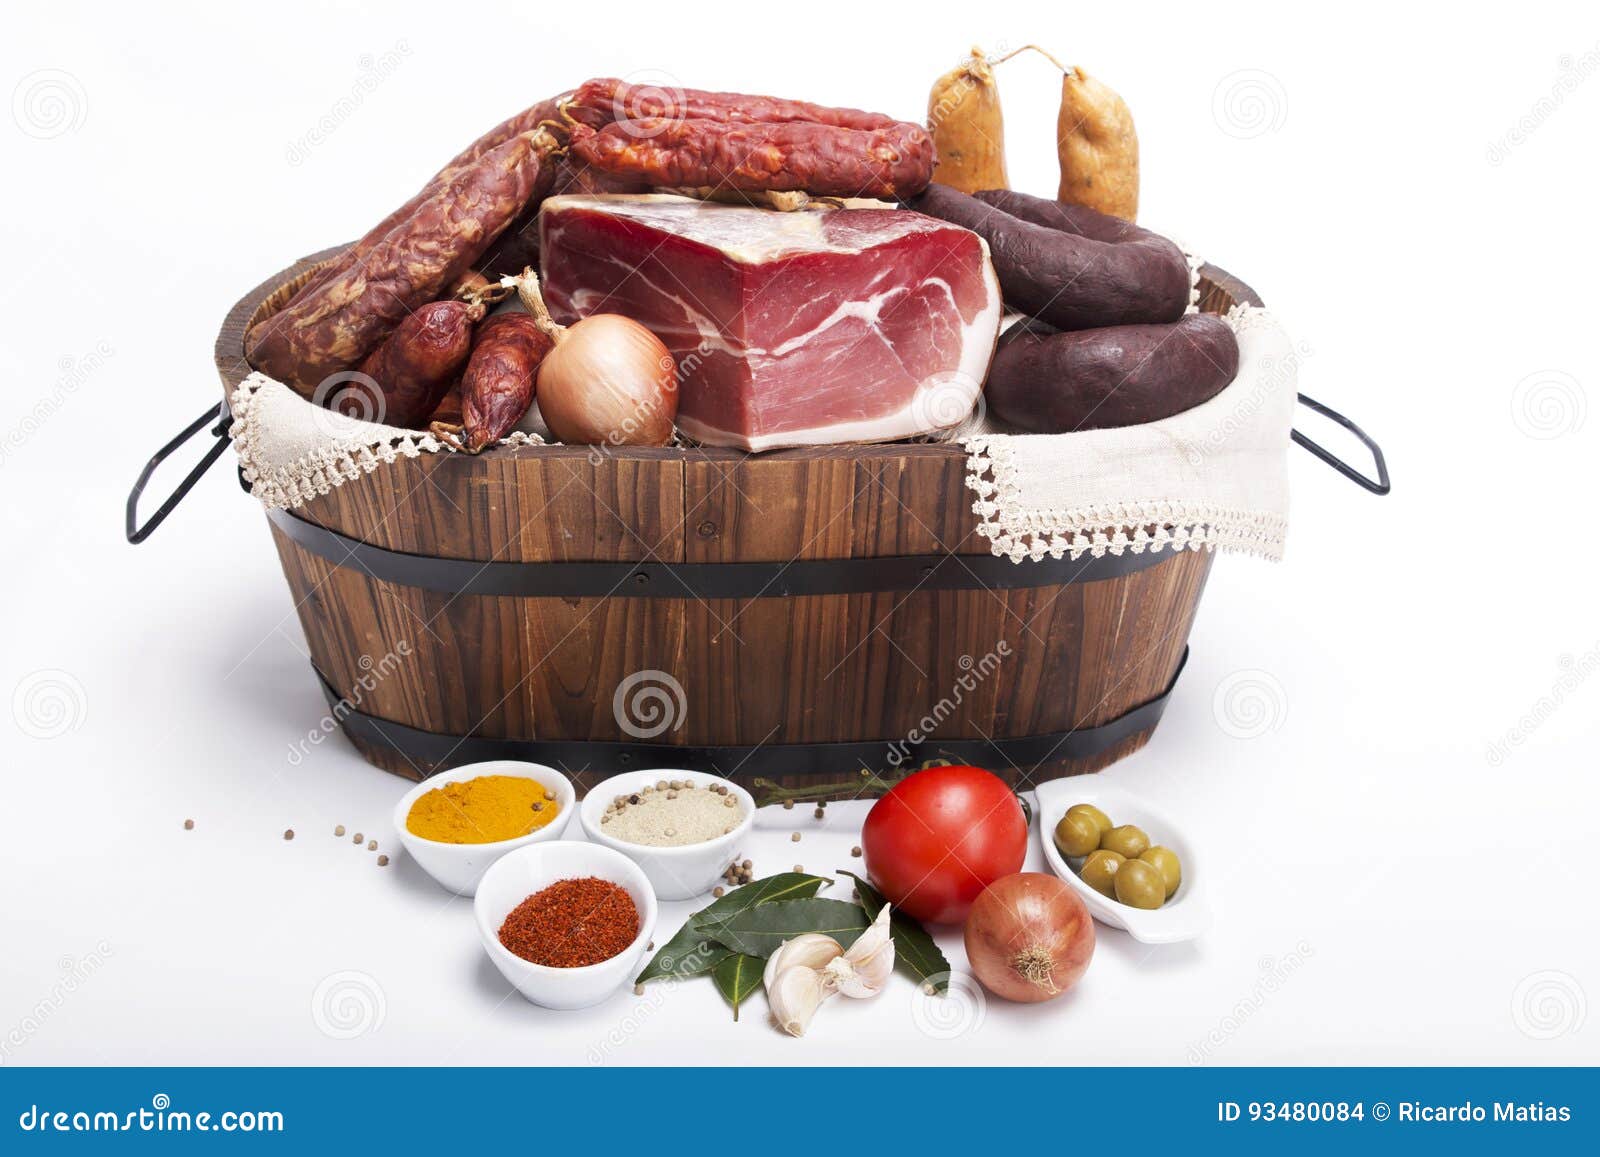 mix of tradicional portuguese food on a basket